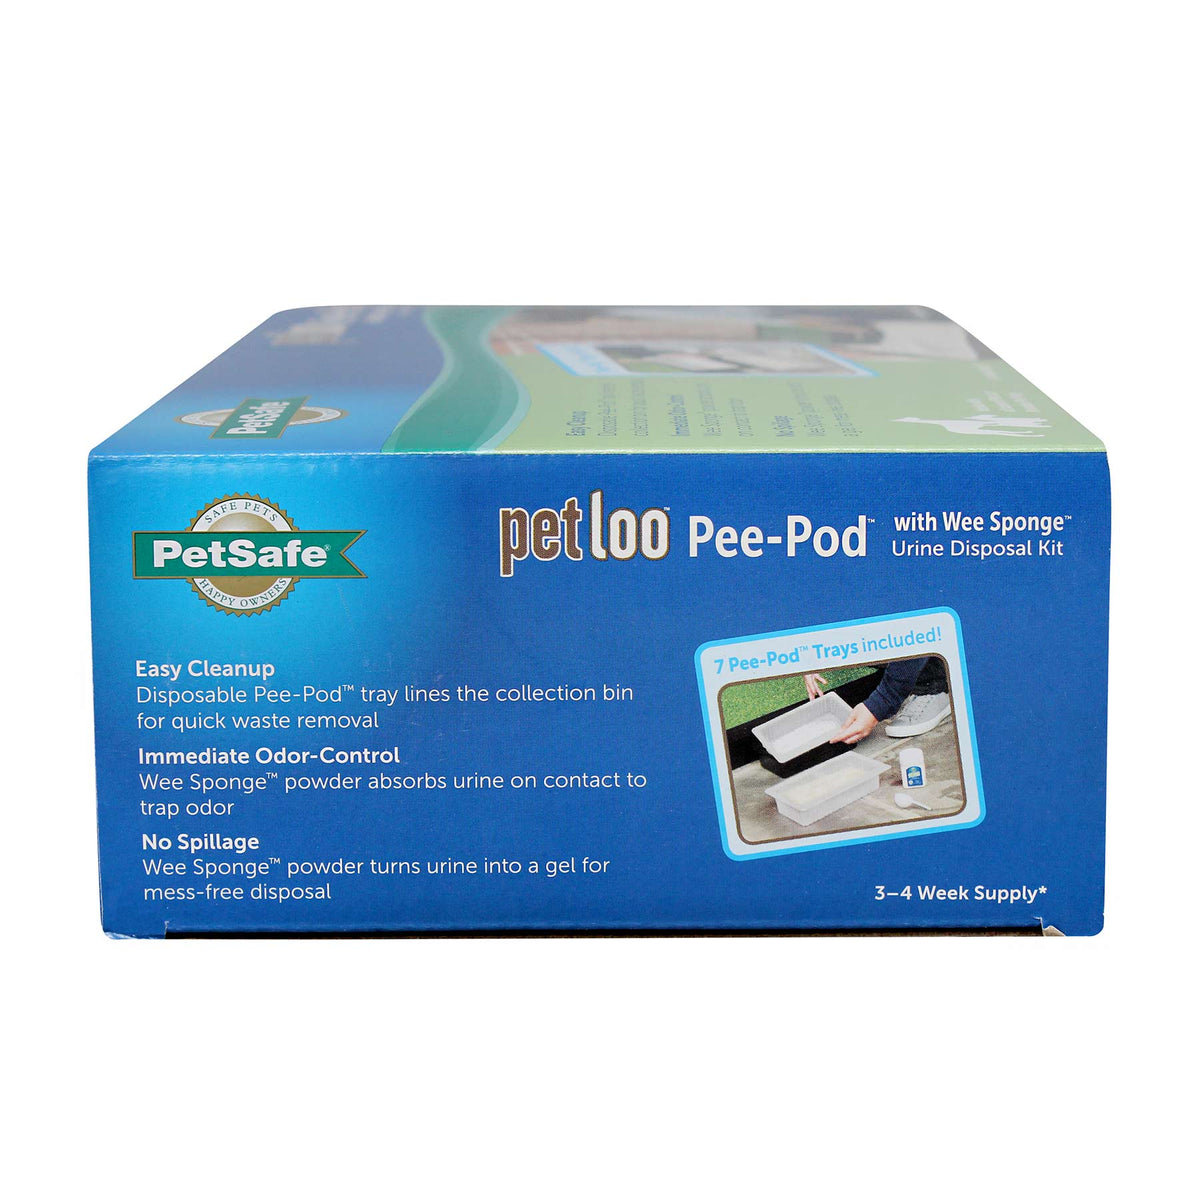 The Pet Loo Pee Pod Pack